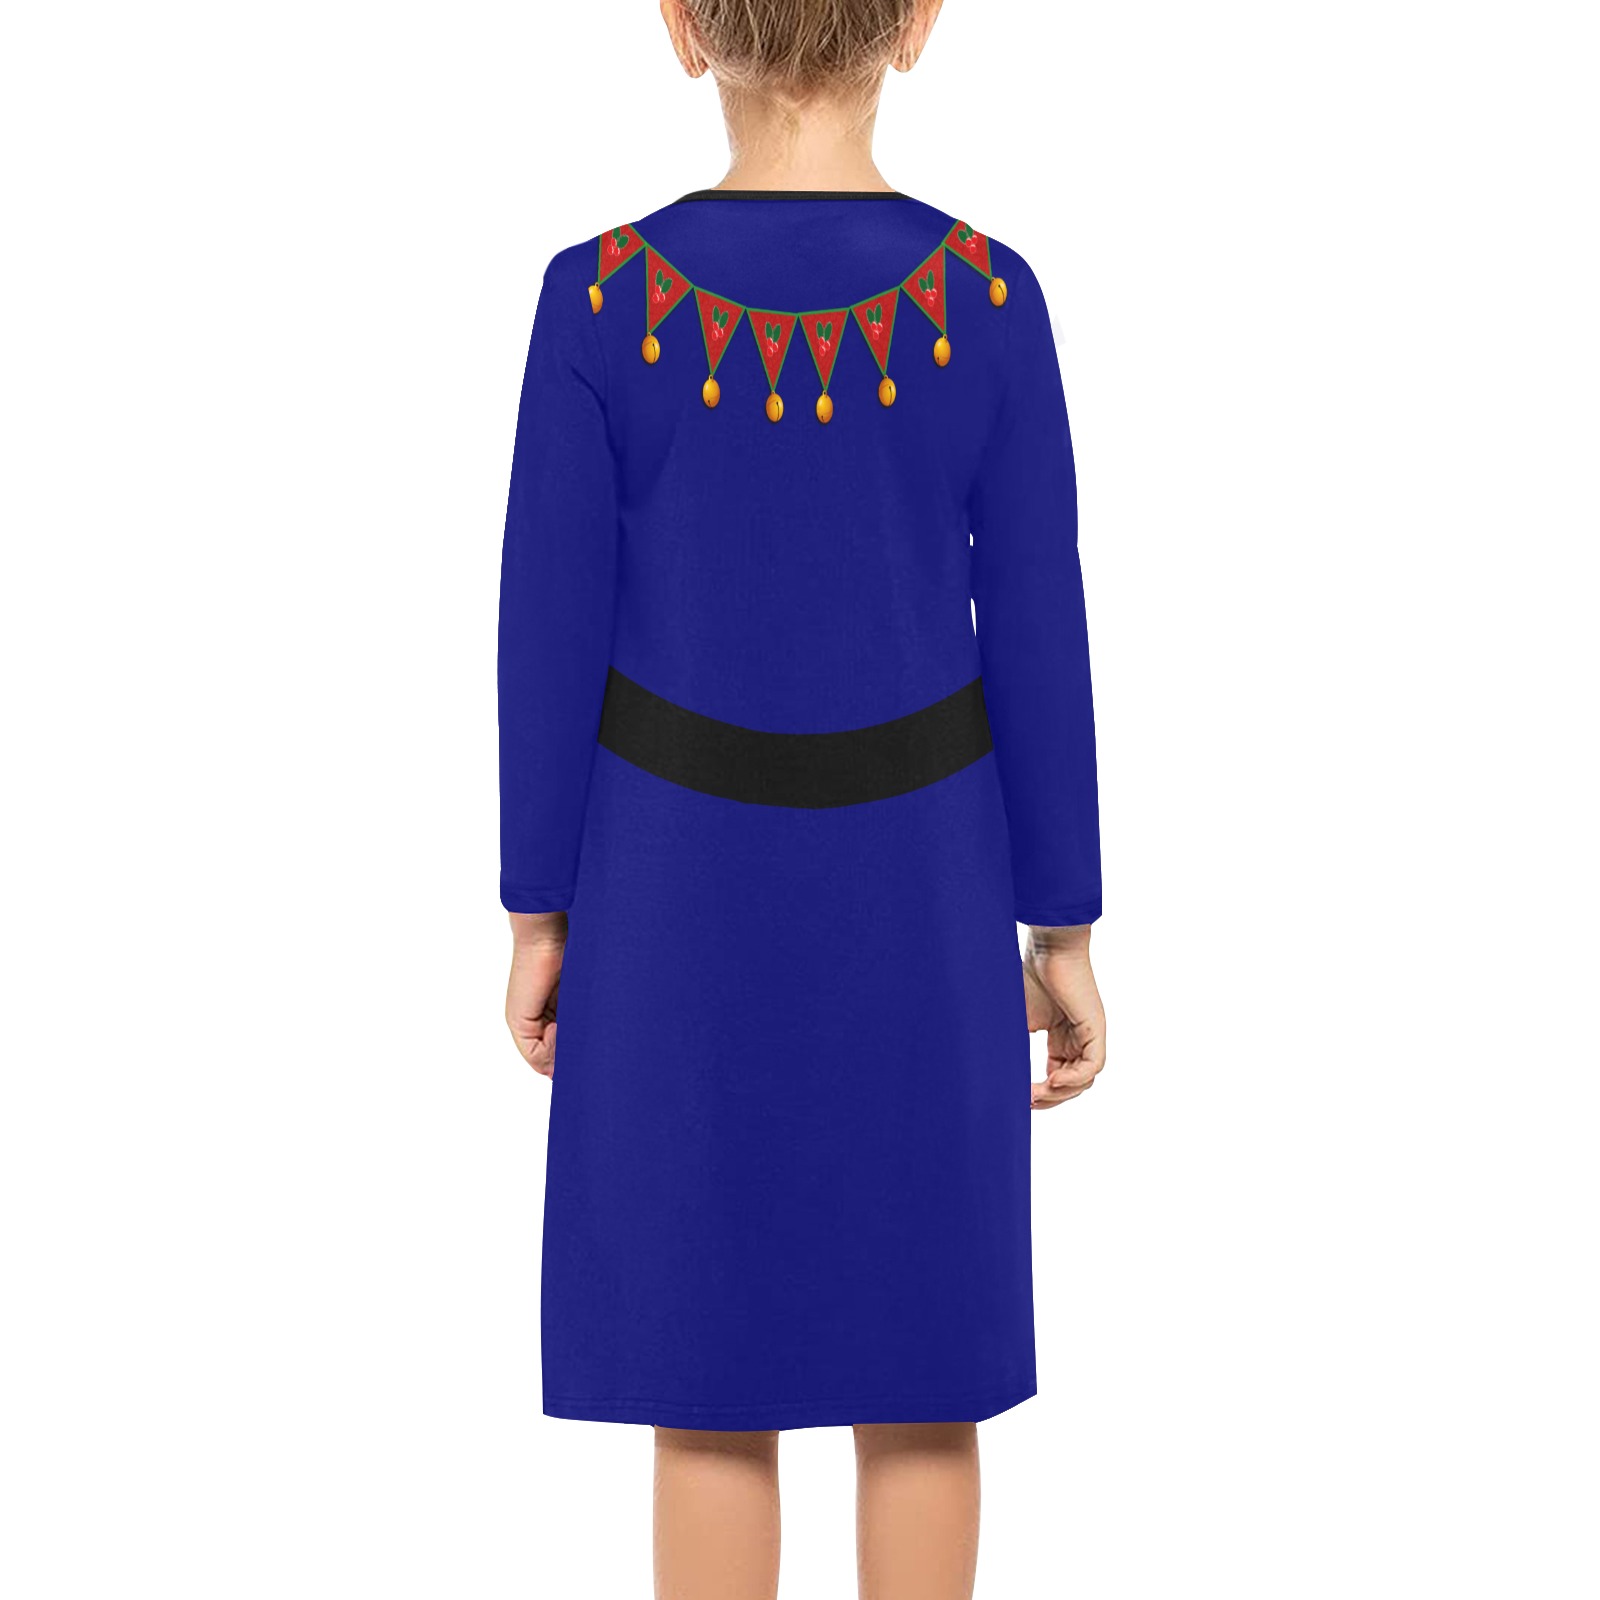 Blue Elf Costume Girls' Long Sleeve Dress (Model D59)